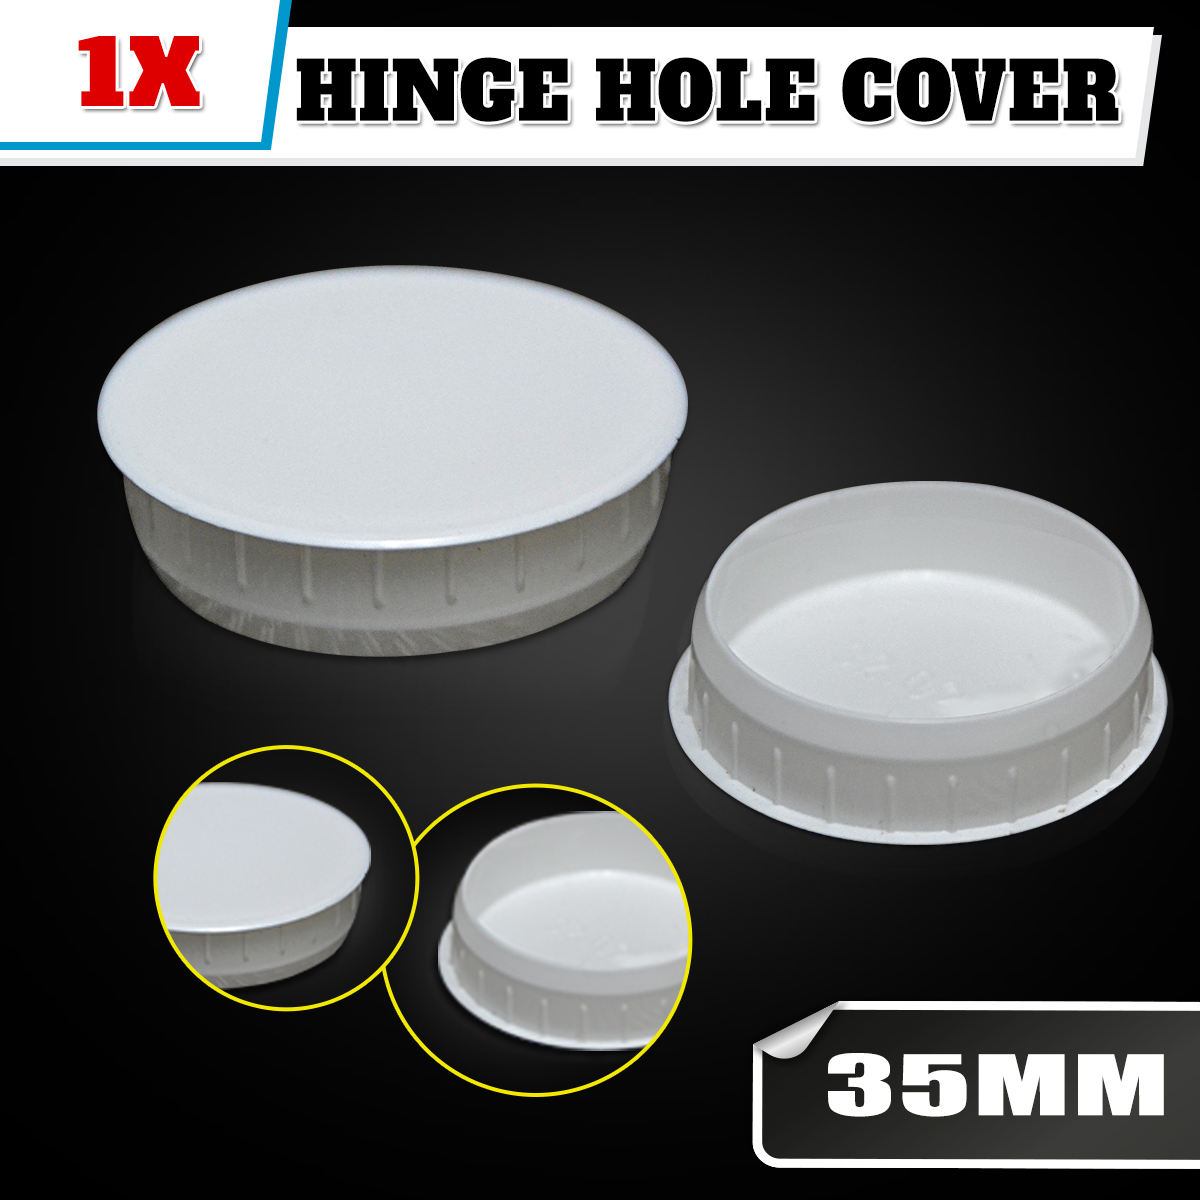 hingl-hole-product-1000-1000-2.jpg